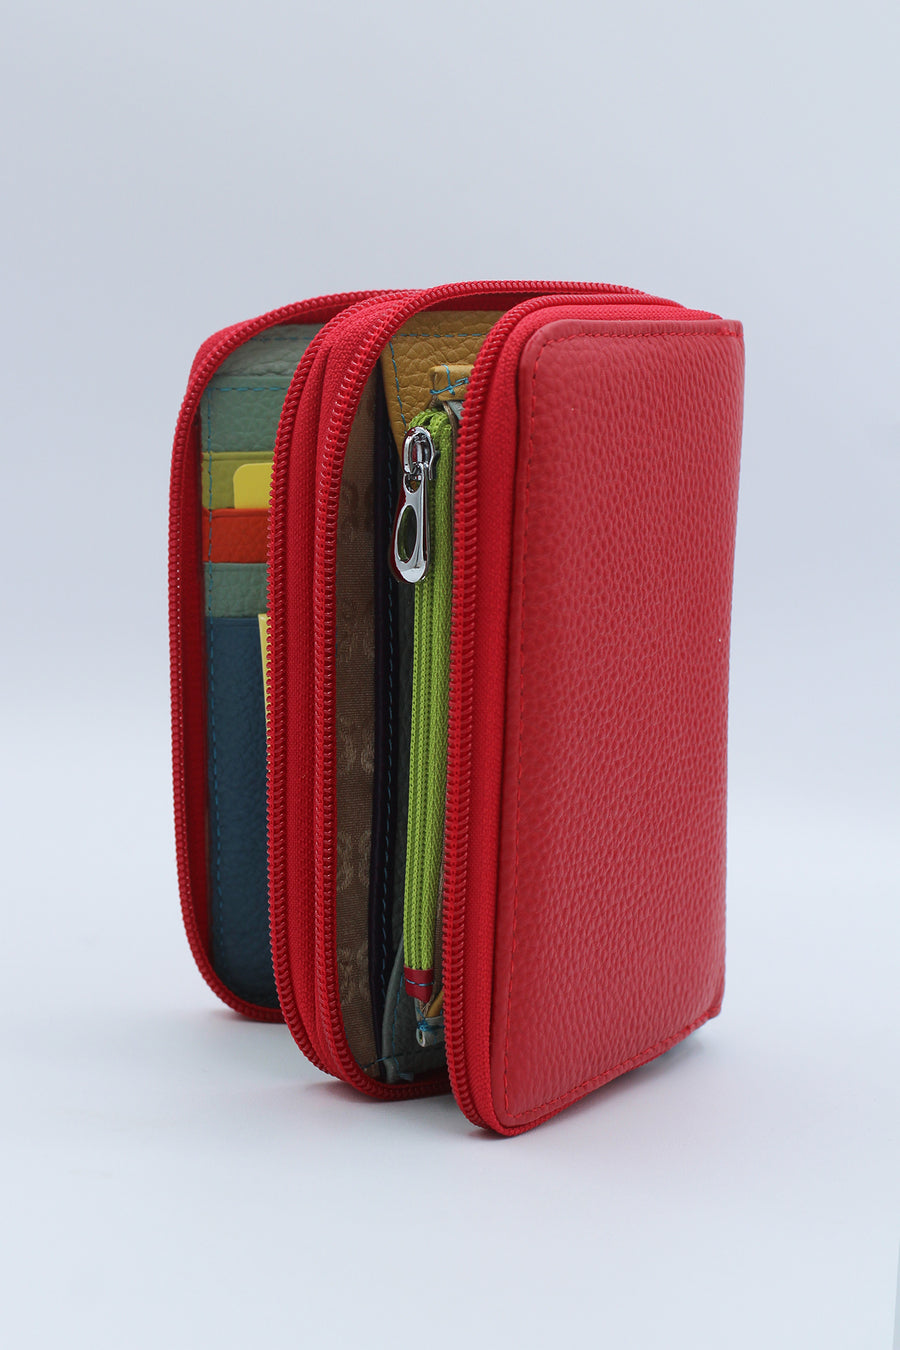 Medium sized multicoloured women's purse